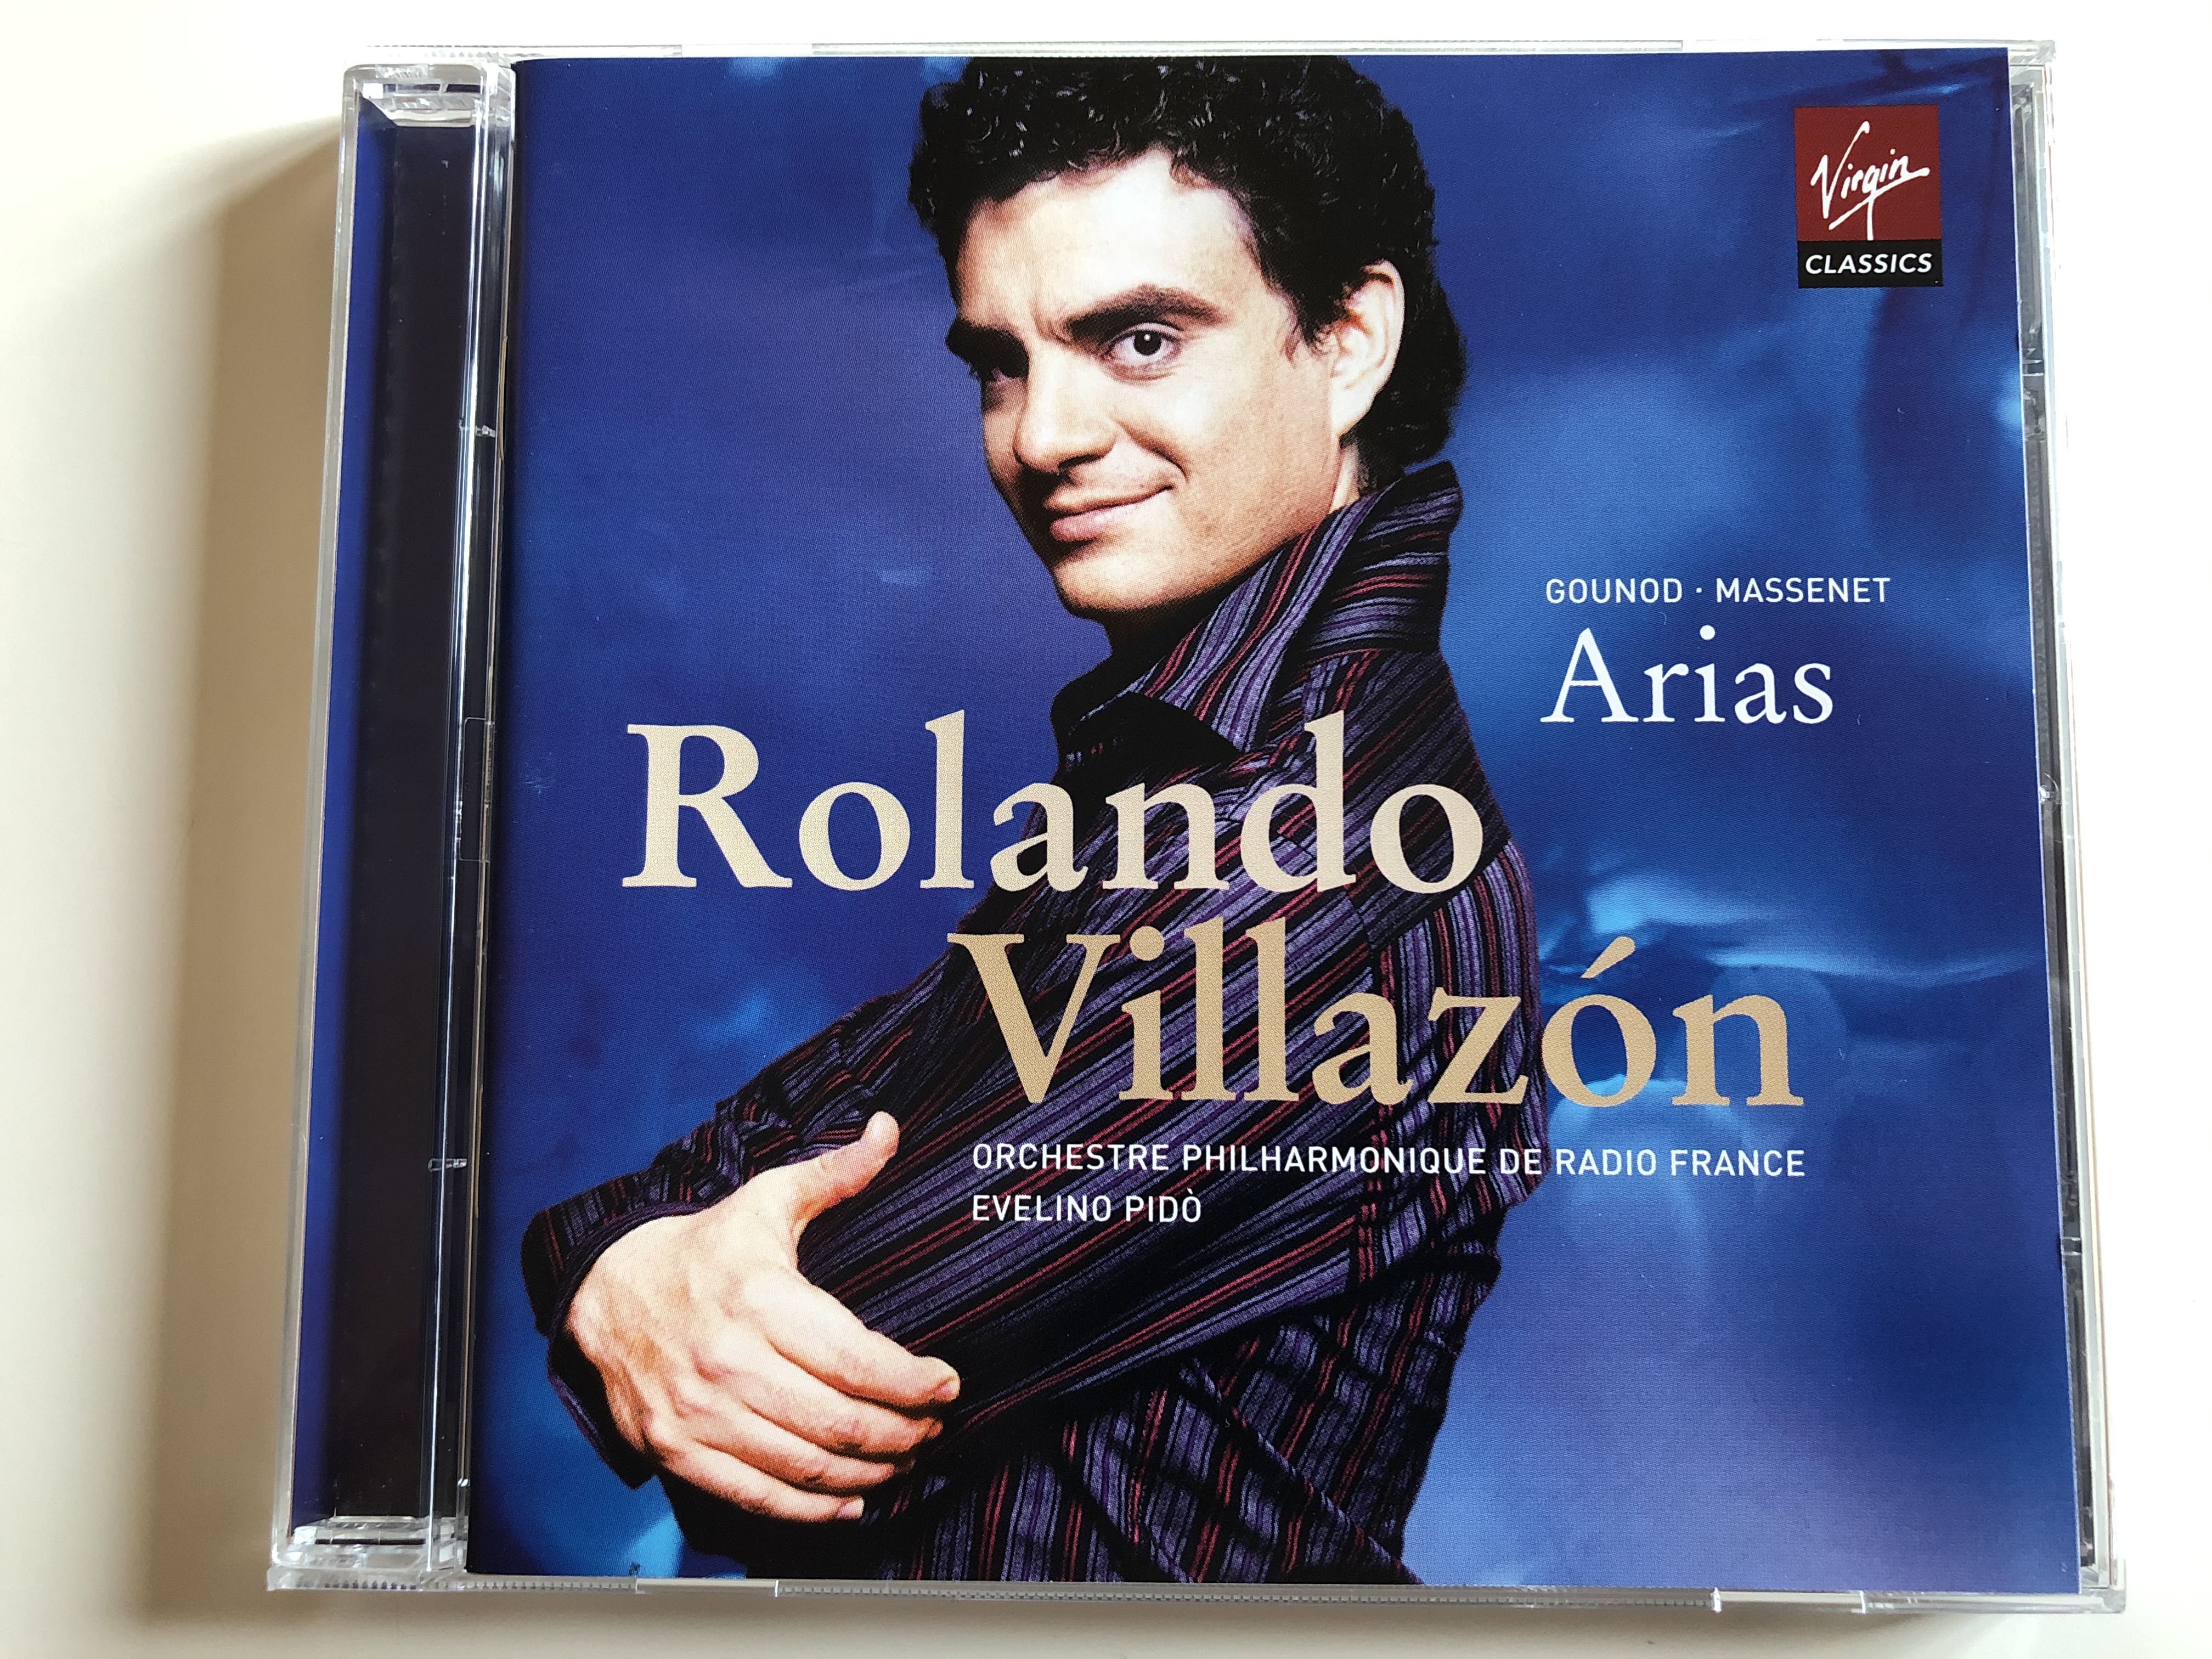 rolando-villaz-n-gounod-massenet-arias-orchestre-philharmonique-de-radio-france-evelino-pid-virgin-classics-audio-cd-2005-724354571923-1-.jpg